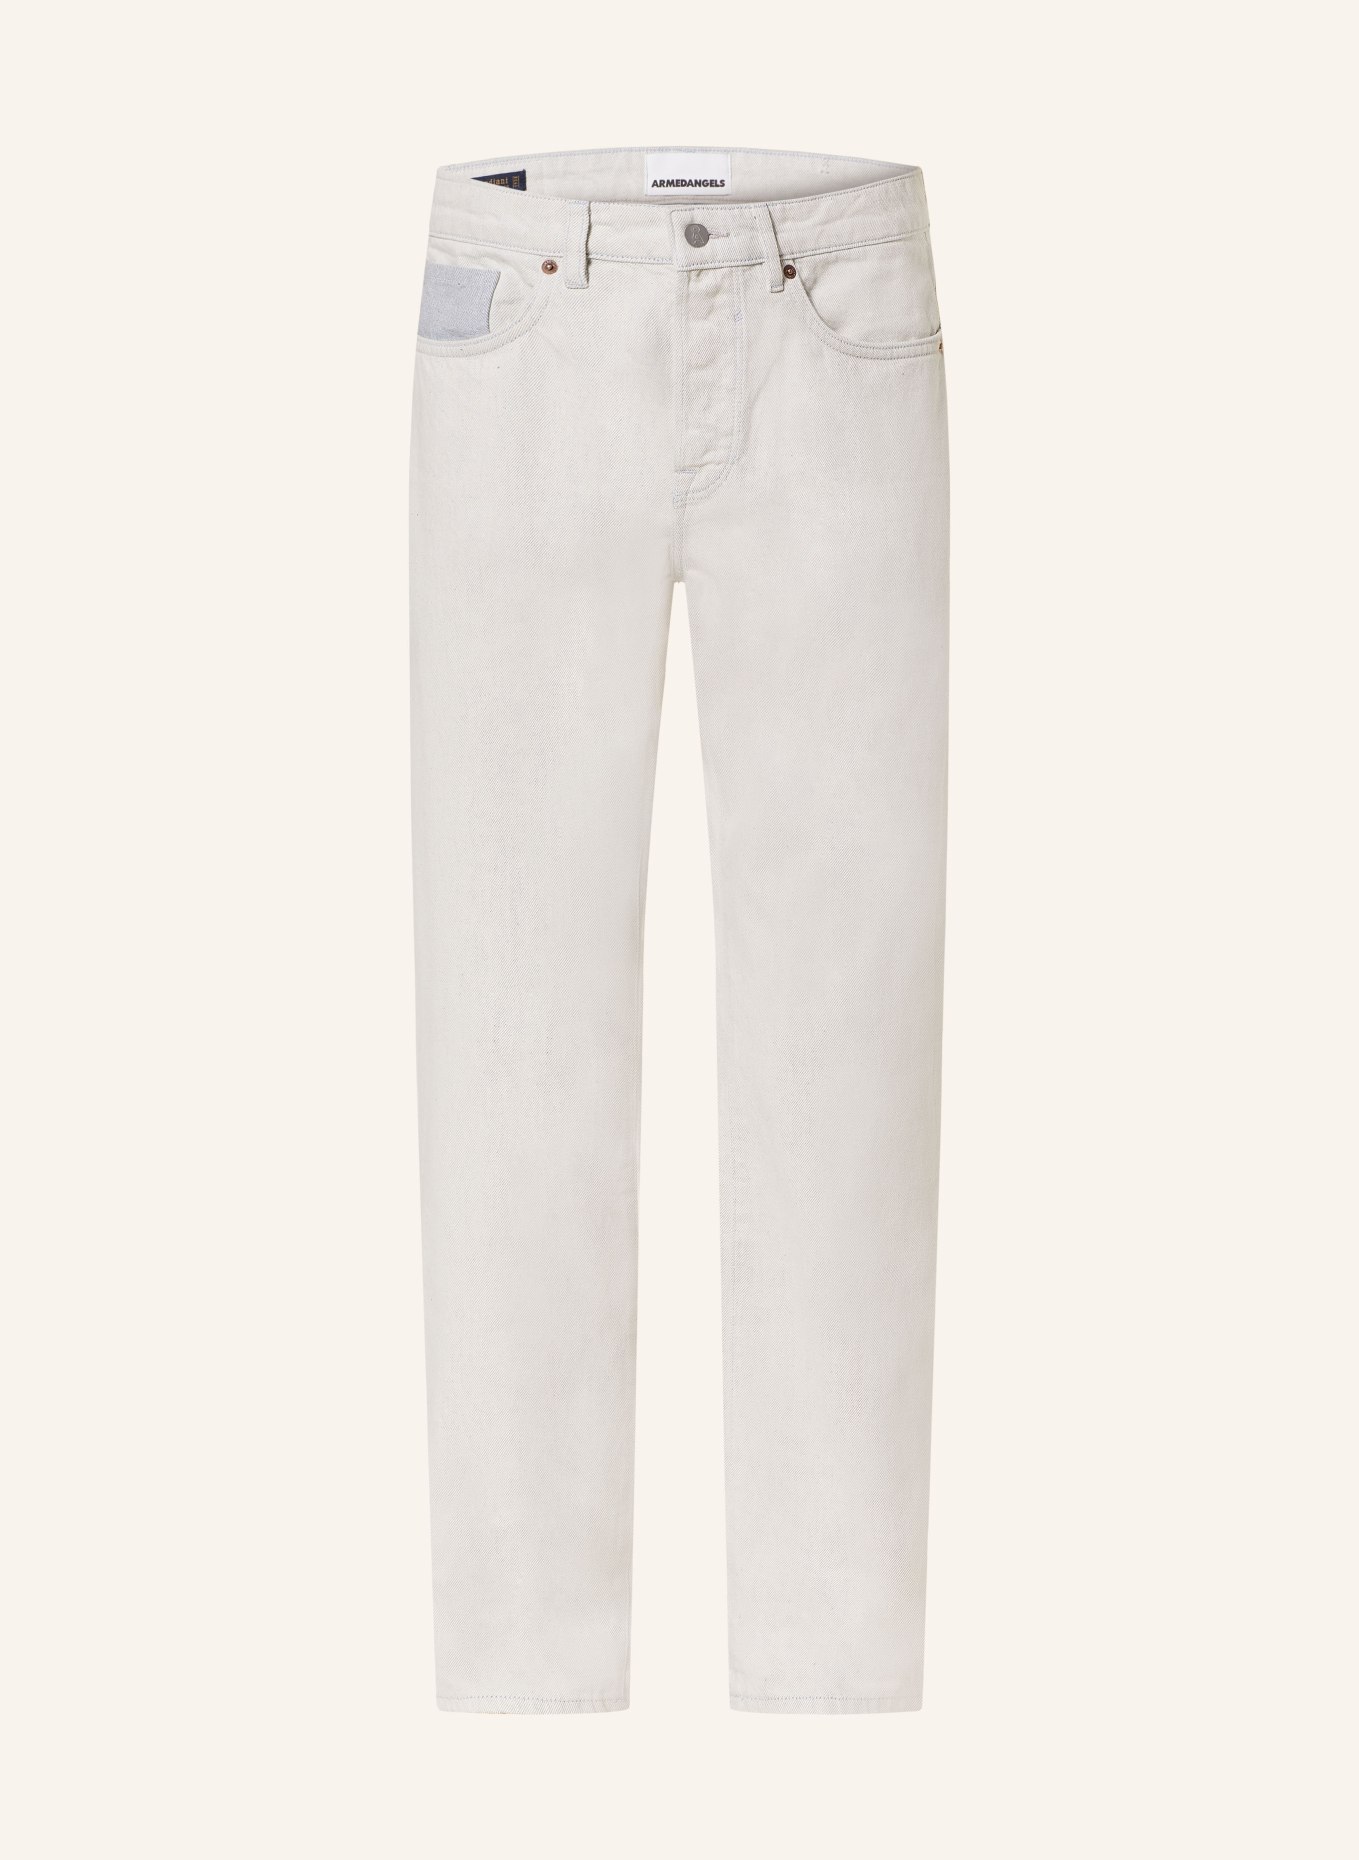 ARMEDANGELS Jeans DYLAANO Straight Fit, Farbe: 2498 light flint (Bild 1)